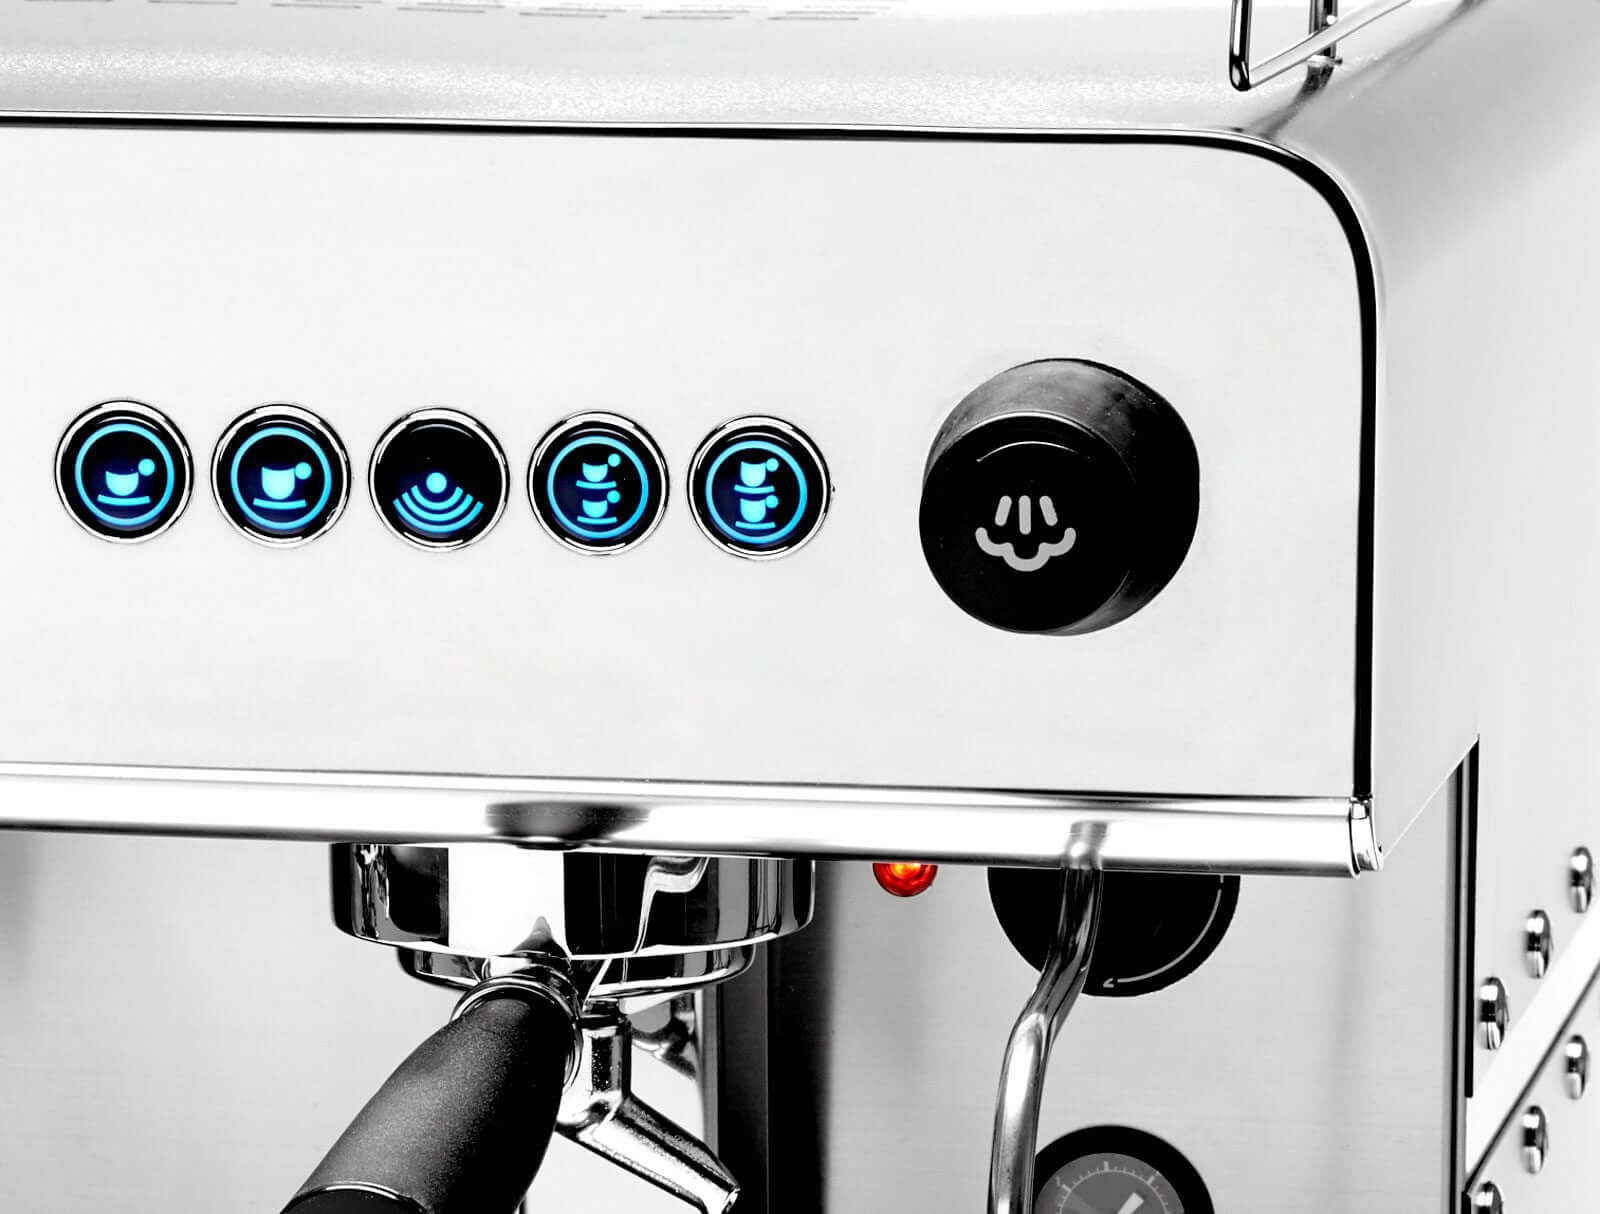 Iberital IB7 Compact 2 Group Traditional Espresso Coffee Machine (Pure Black)